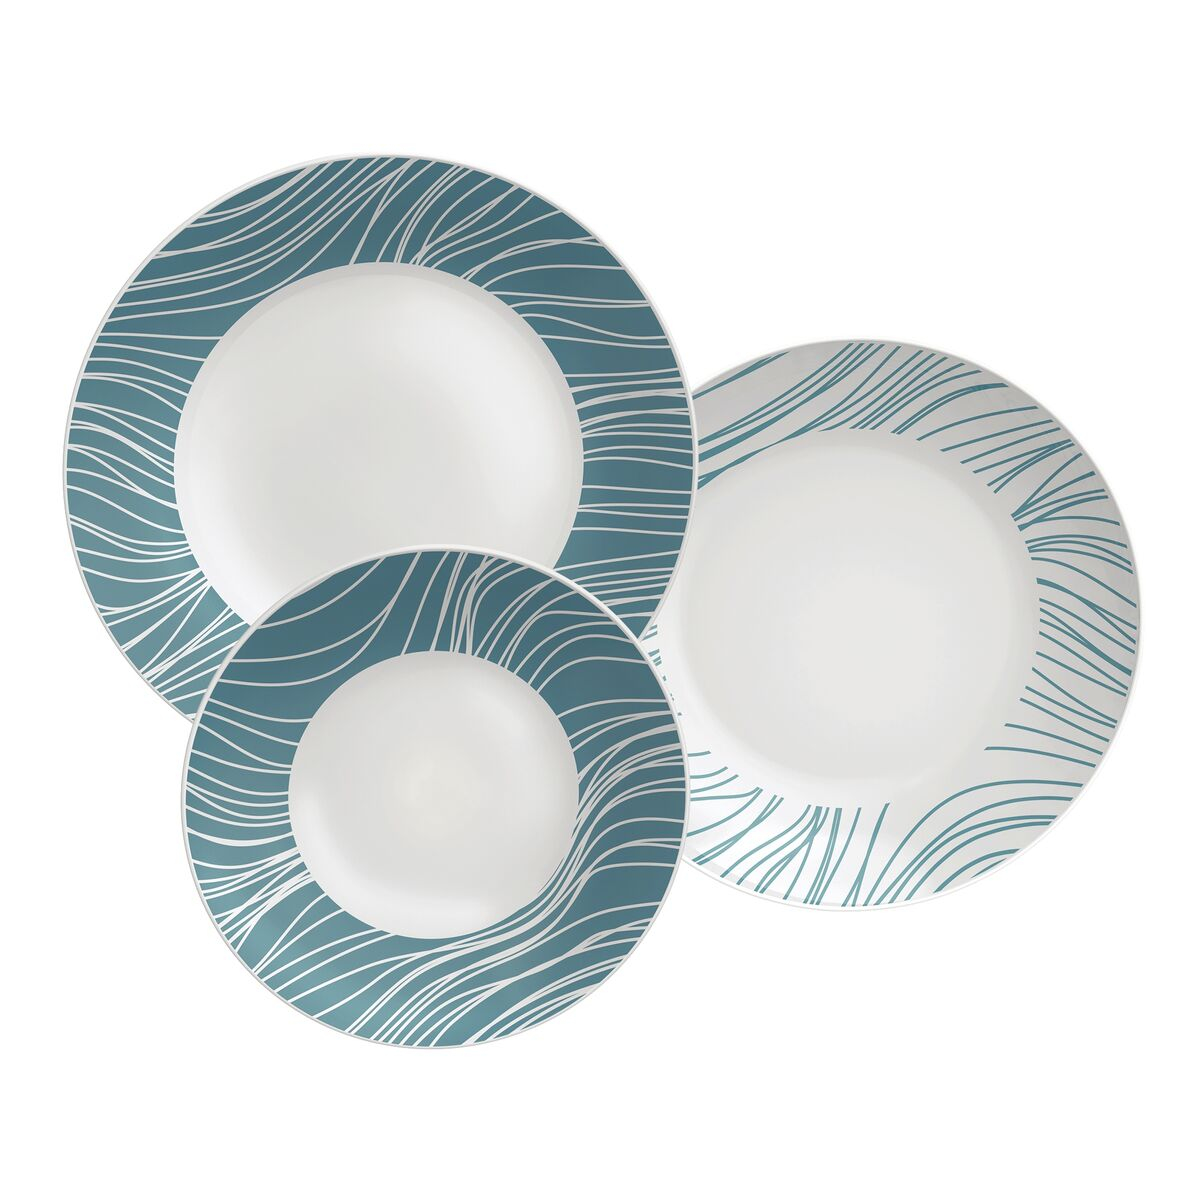 Tramontina Clarice 12-Piece Decorated Porcelain Dinnerware Set